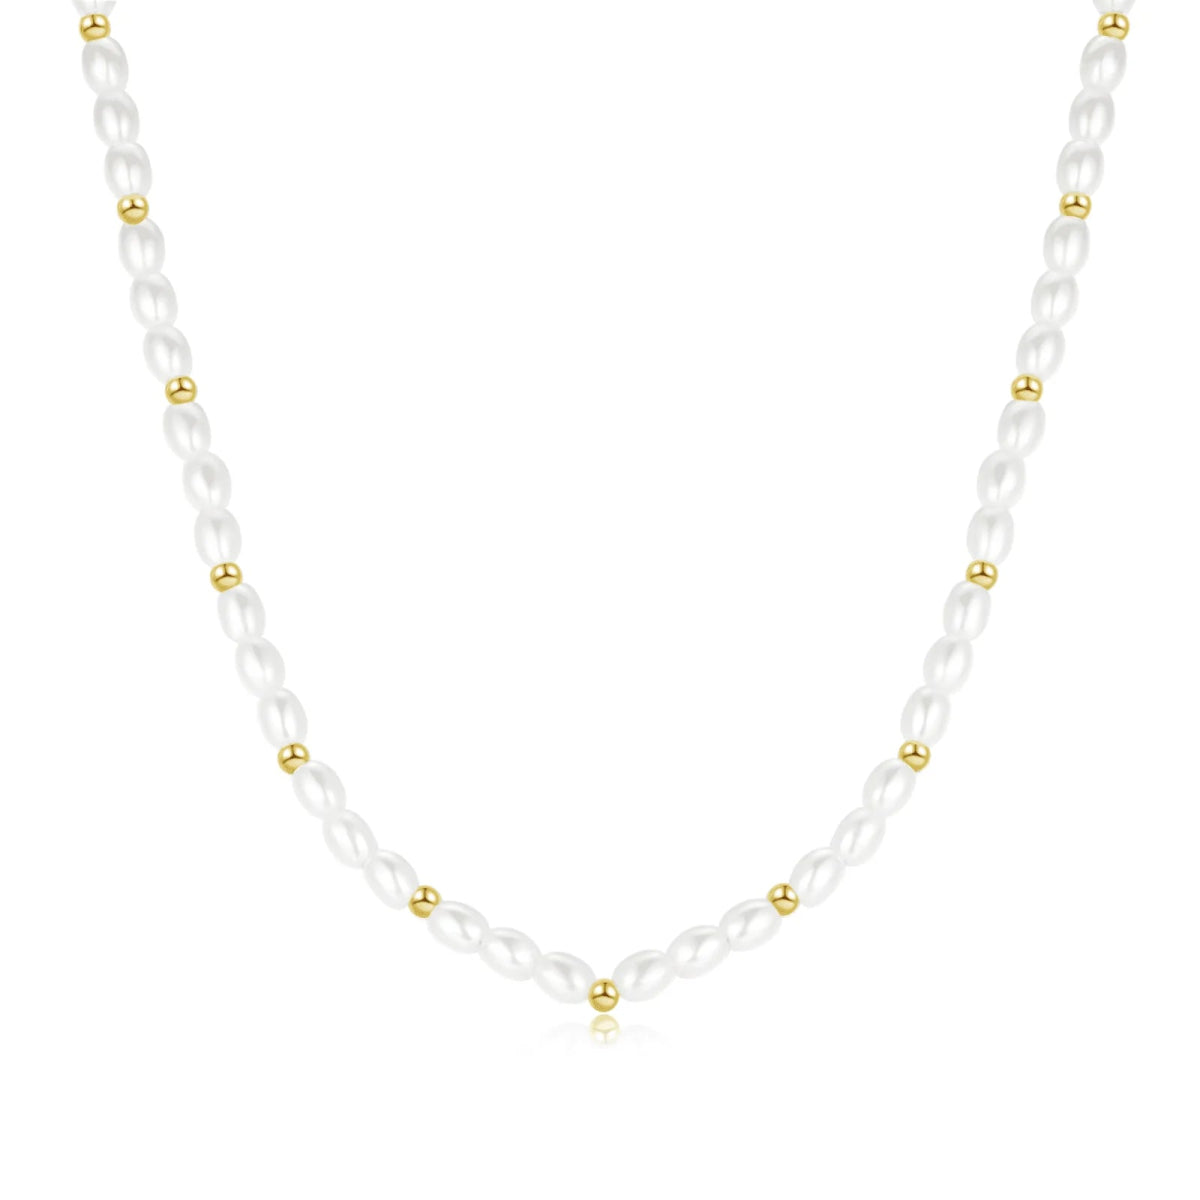 "Nuka" Necklace - Milas Jewels Shop